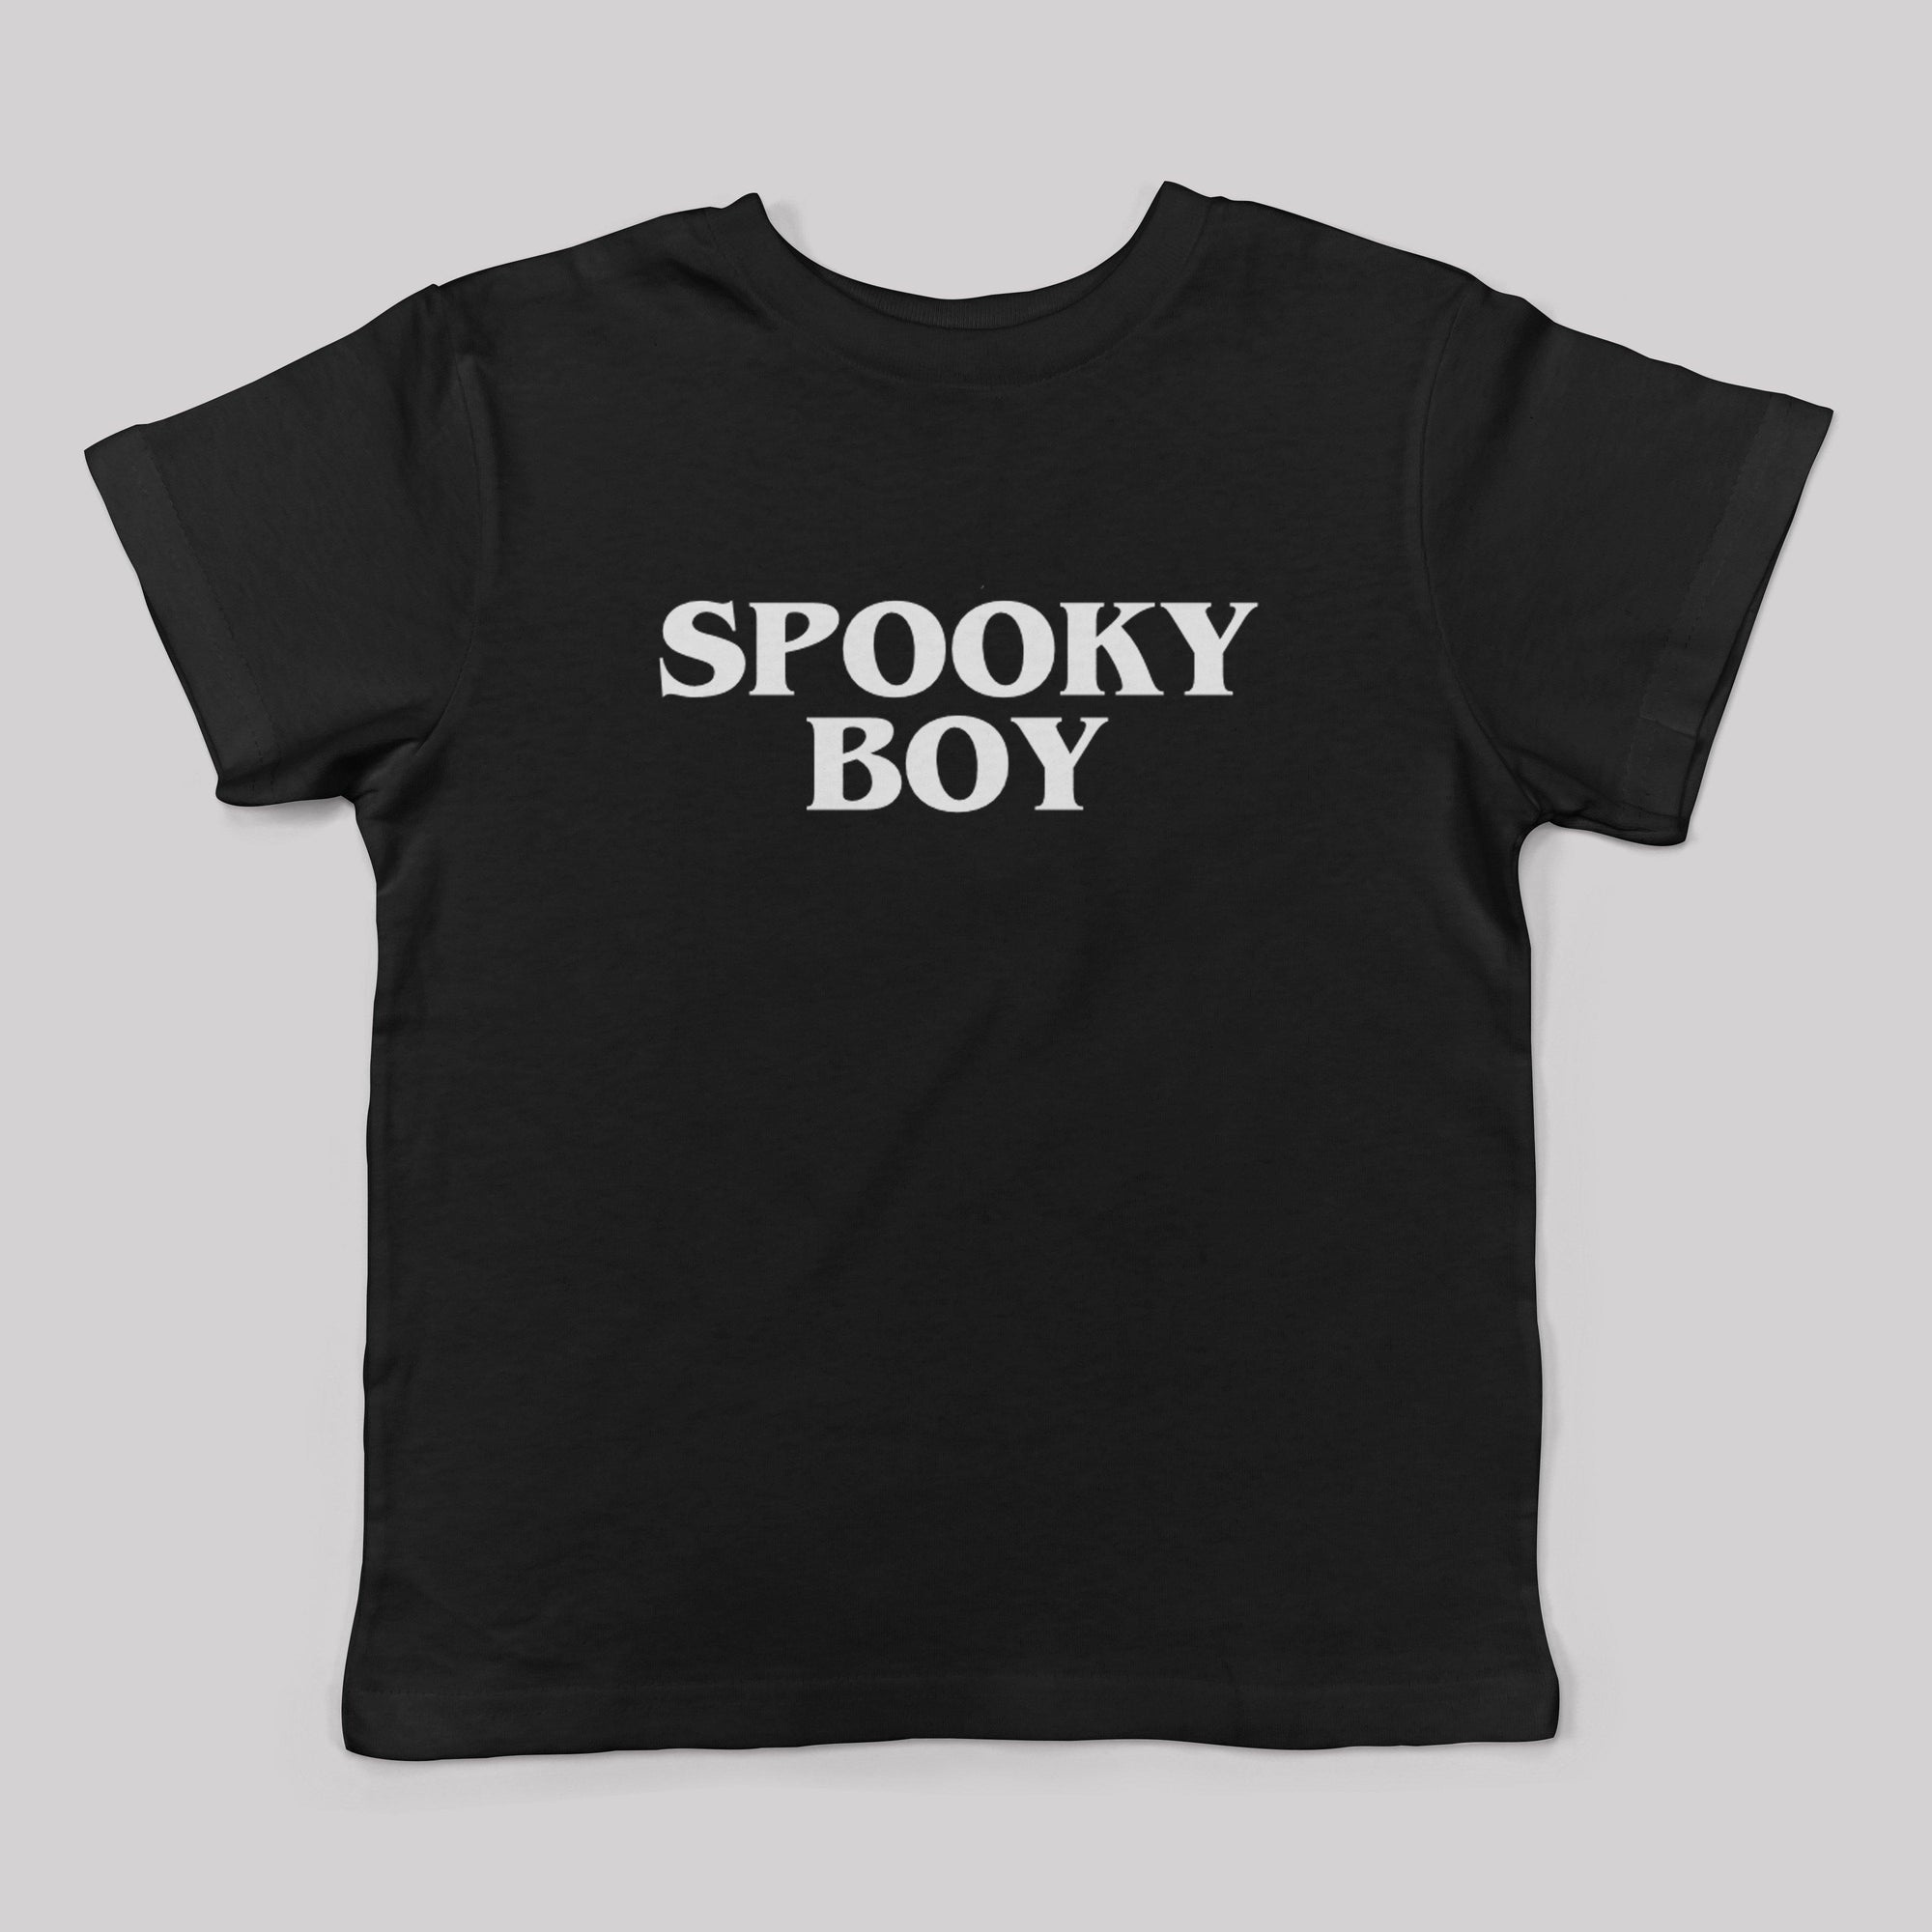 Spooky Boy Kids Tee - Baby Teith